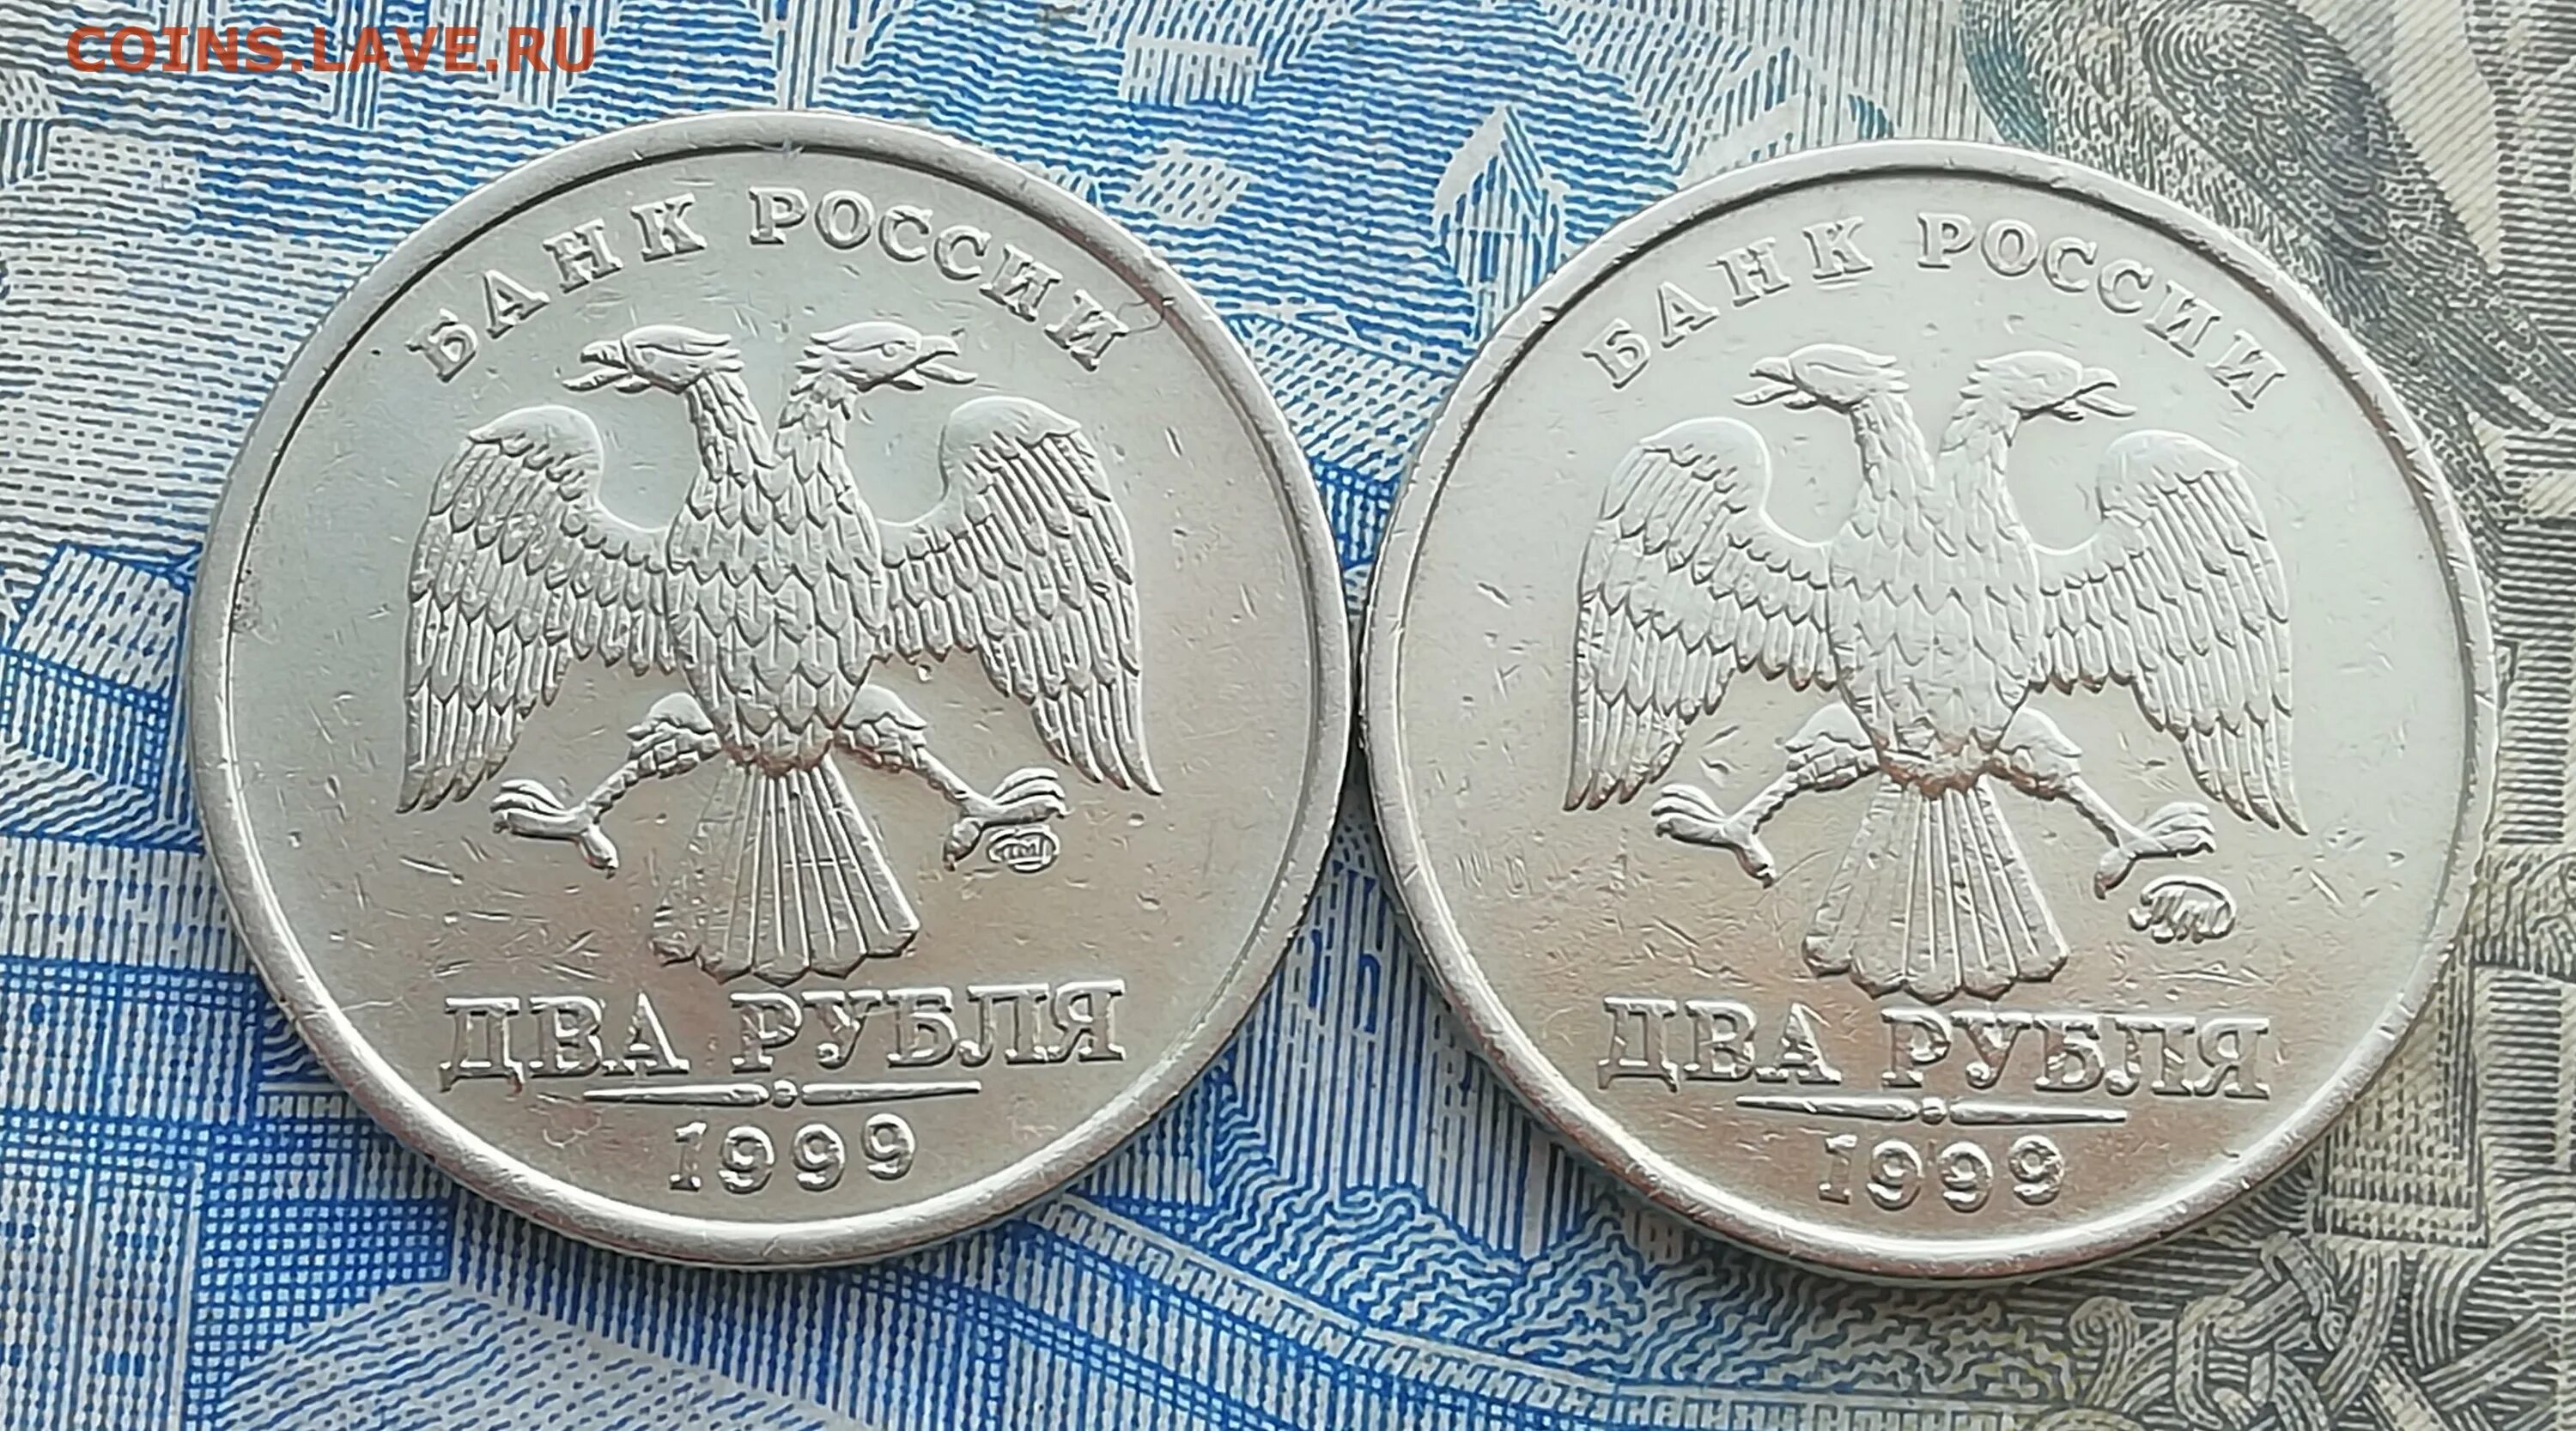 2 Рубля 1999 ММД. 2 Рубля 1999 СПМД. Монета 2 рубля 1999 года. Тираж монеты 2 рубля 1999 ММД.